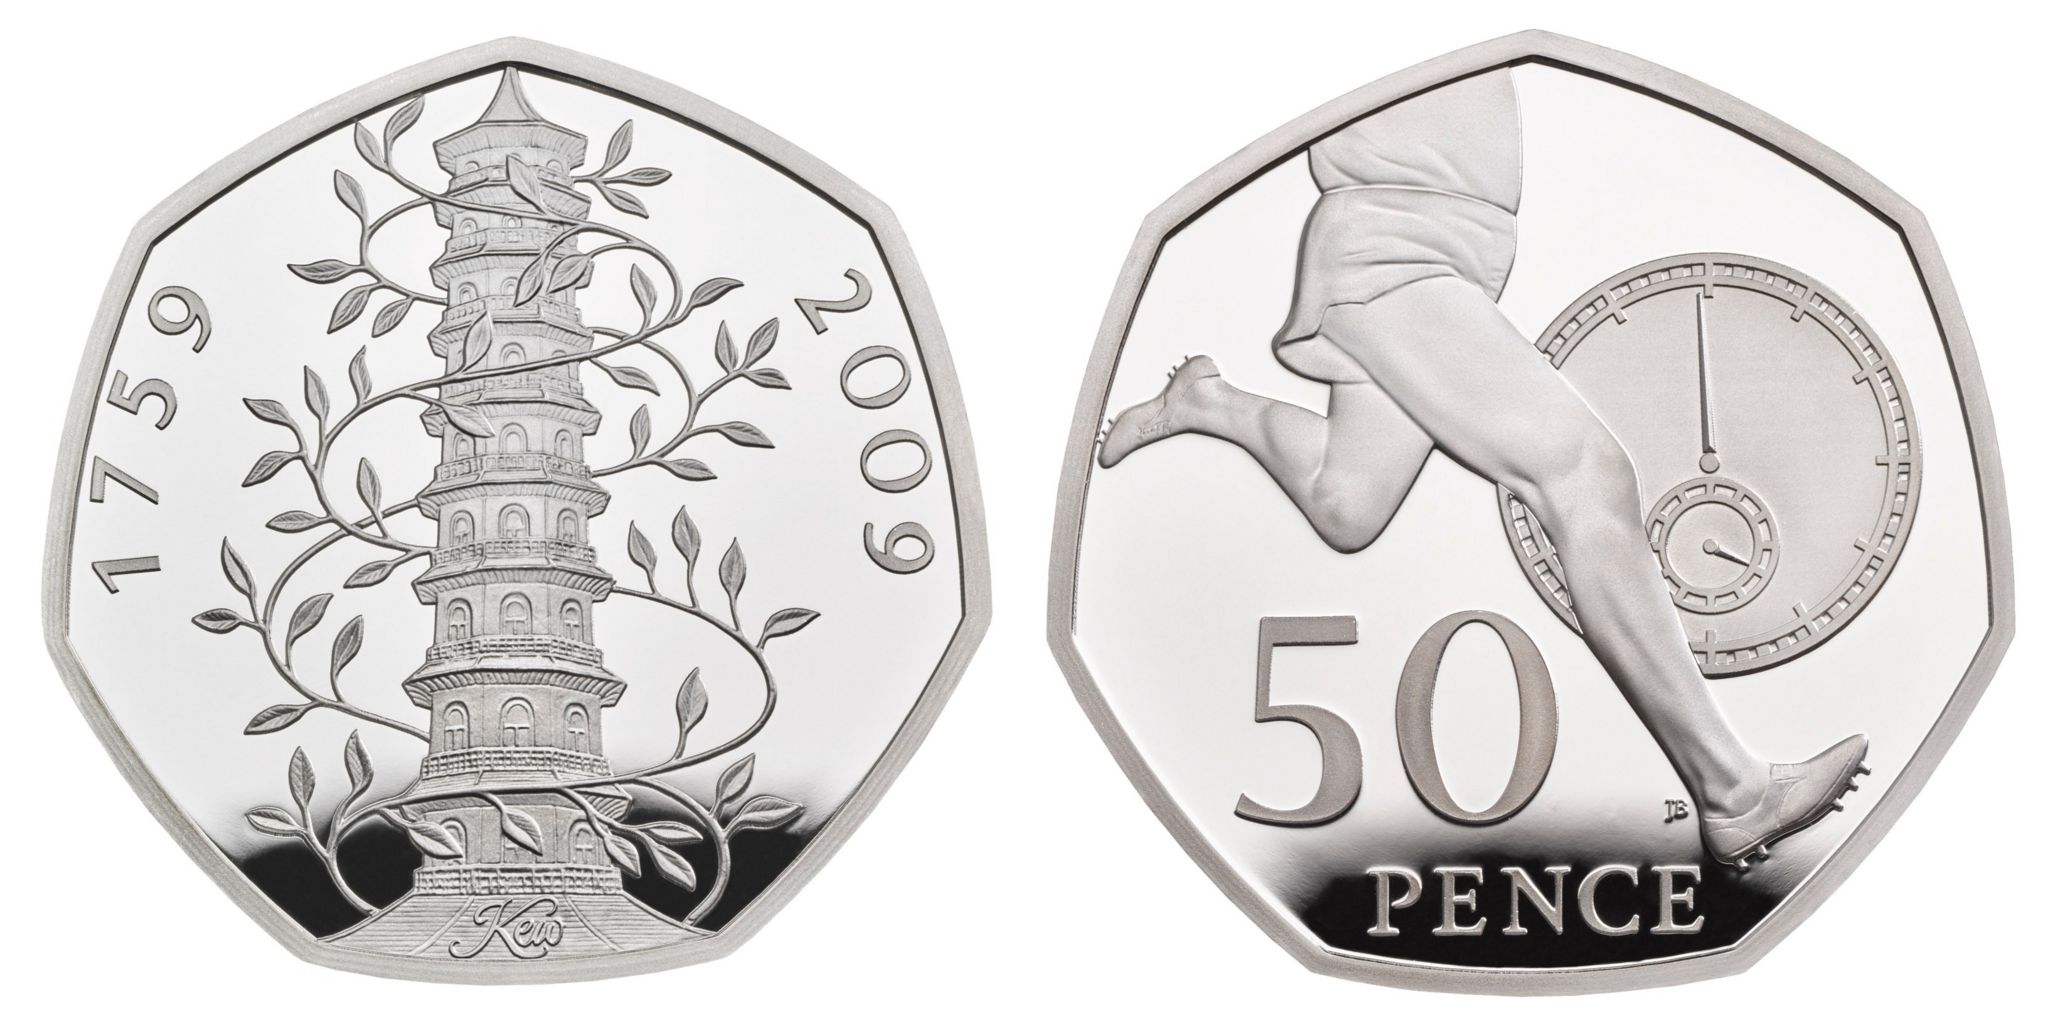 50p commemorative coins